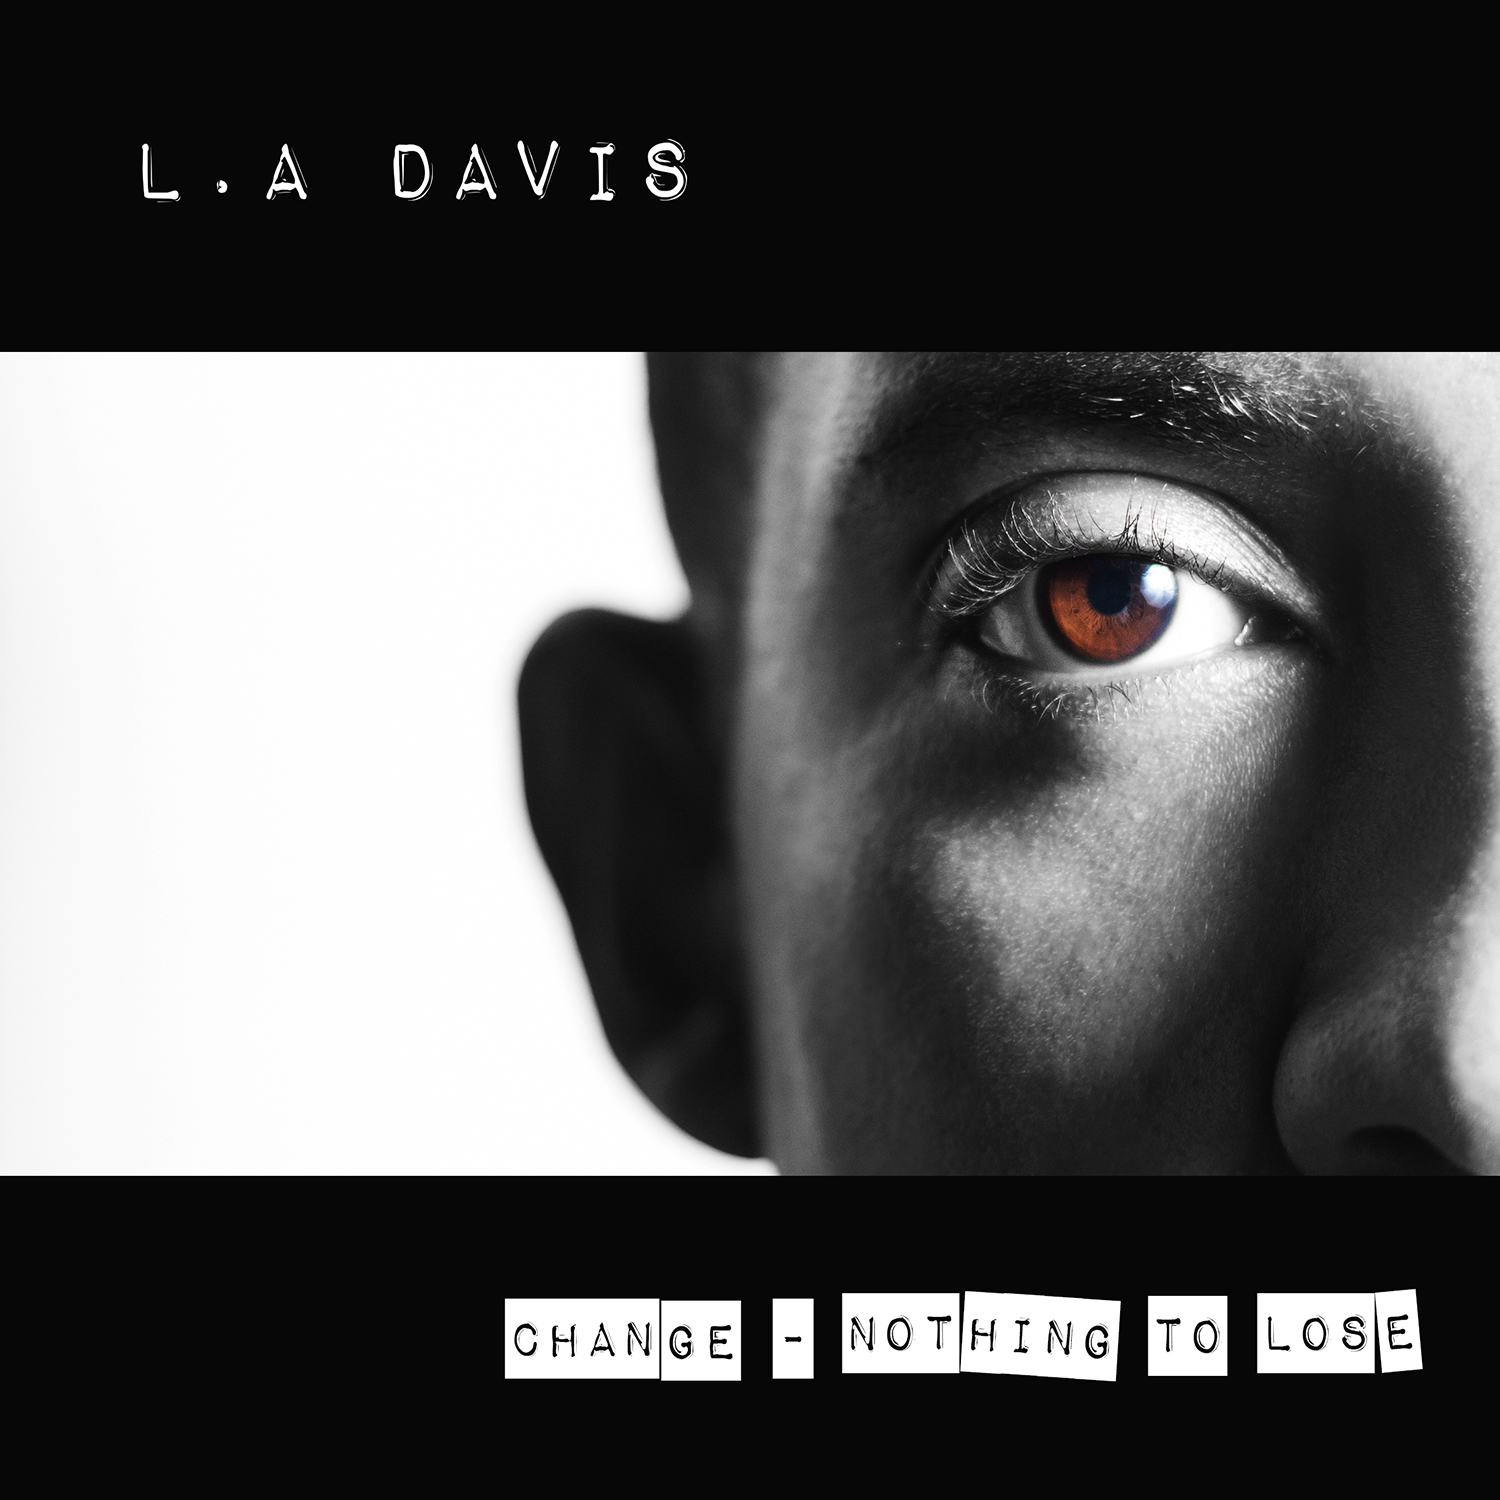  L.A. Davis – “Change (Nothing To Lose)”